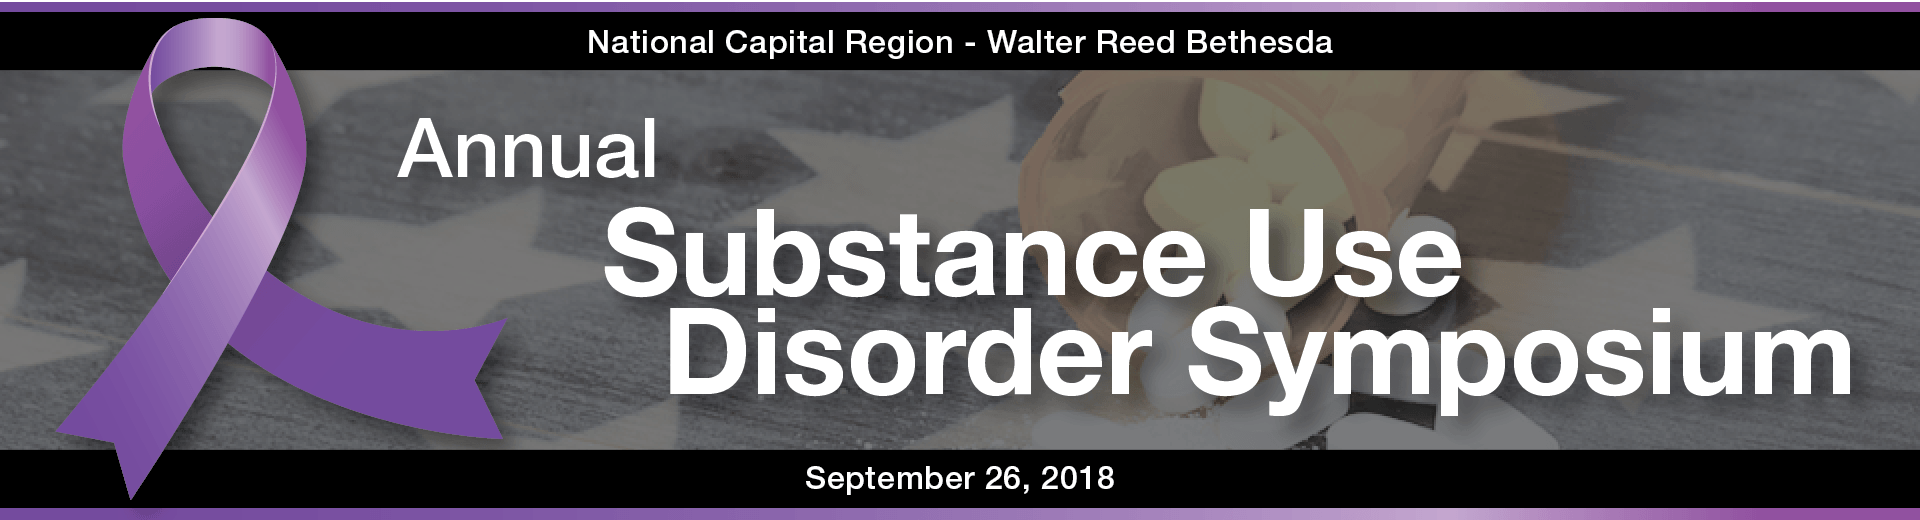 National Capital Region Substance Use Disorder Symposium header